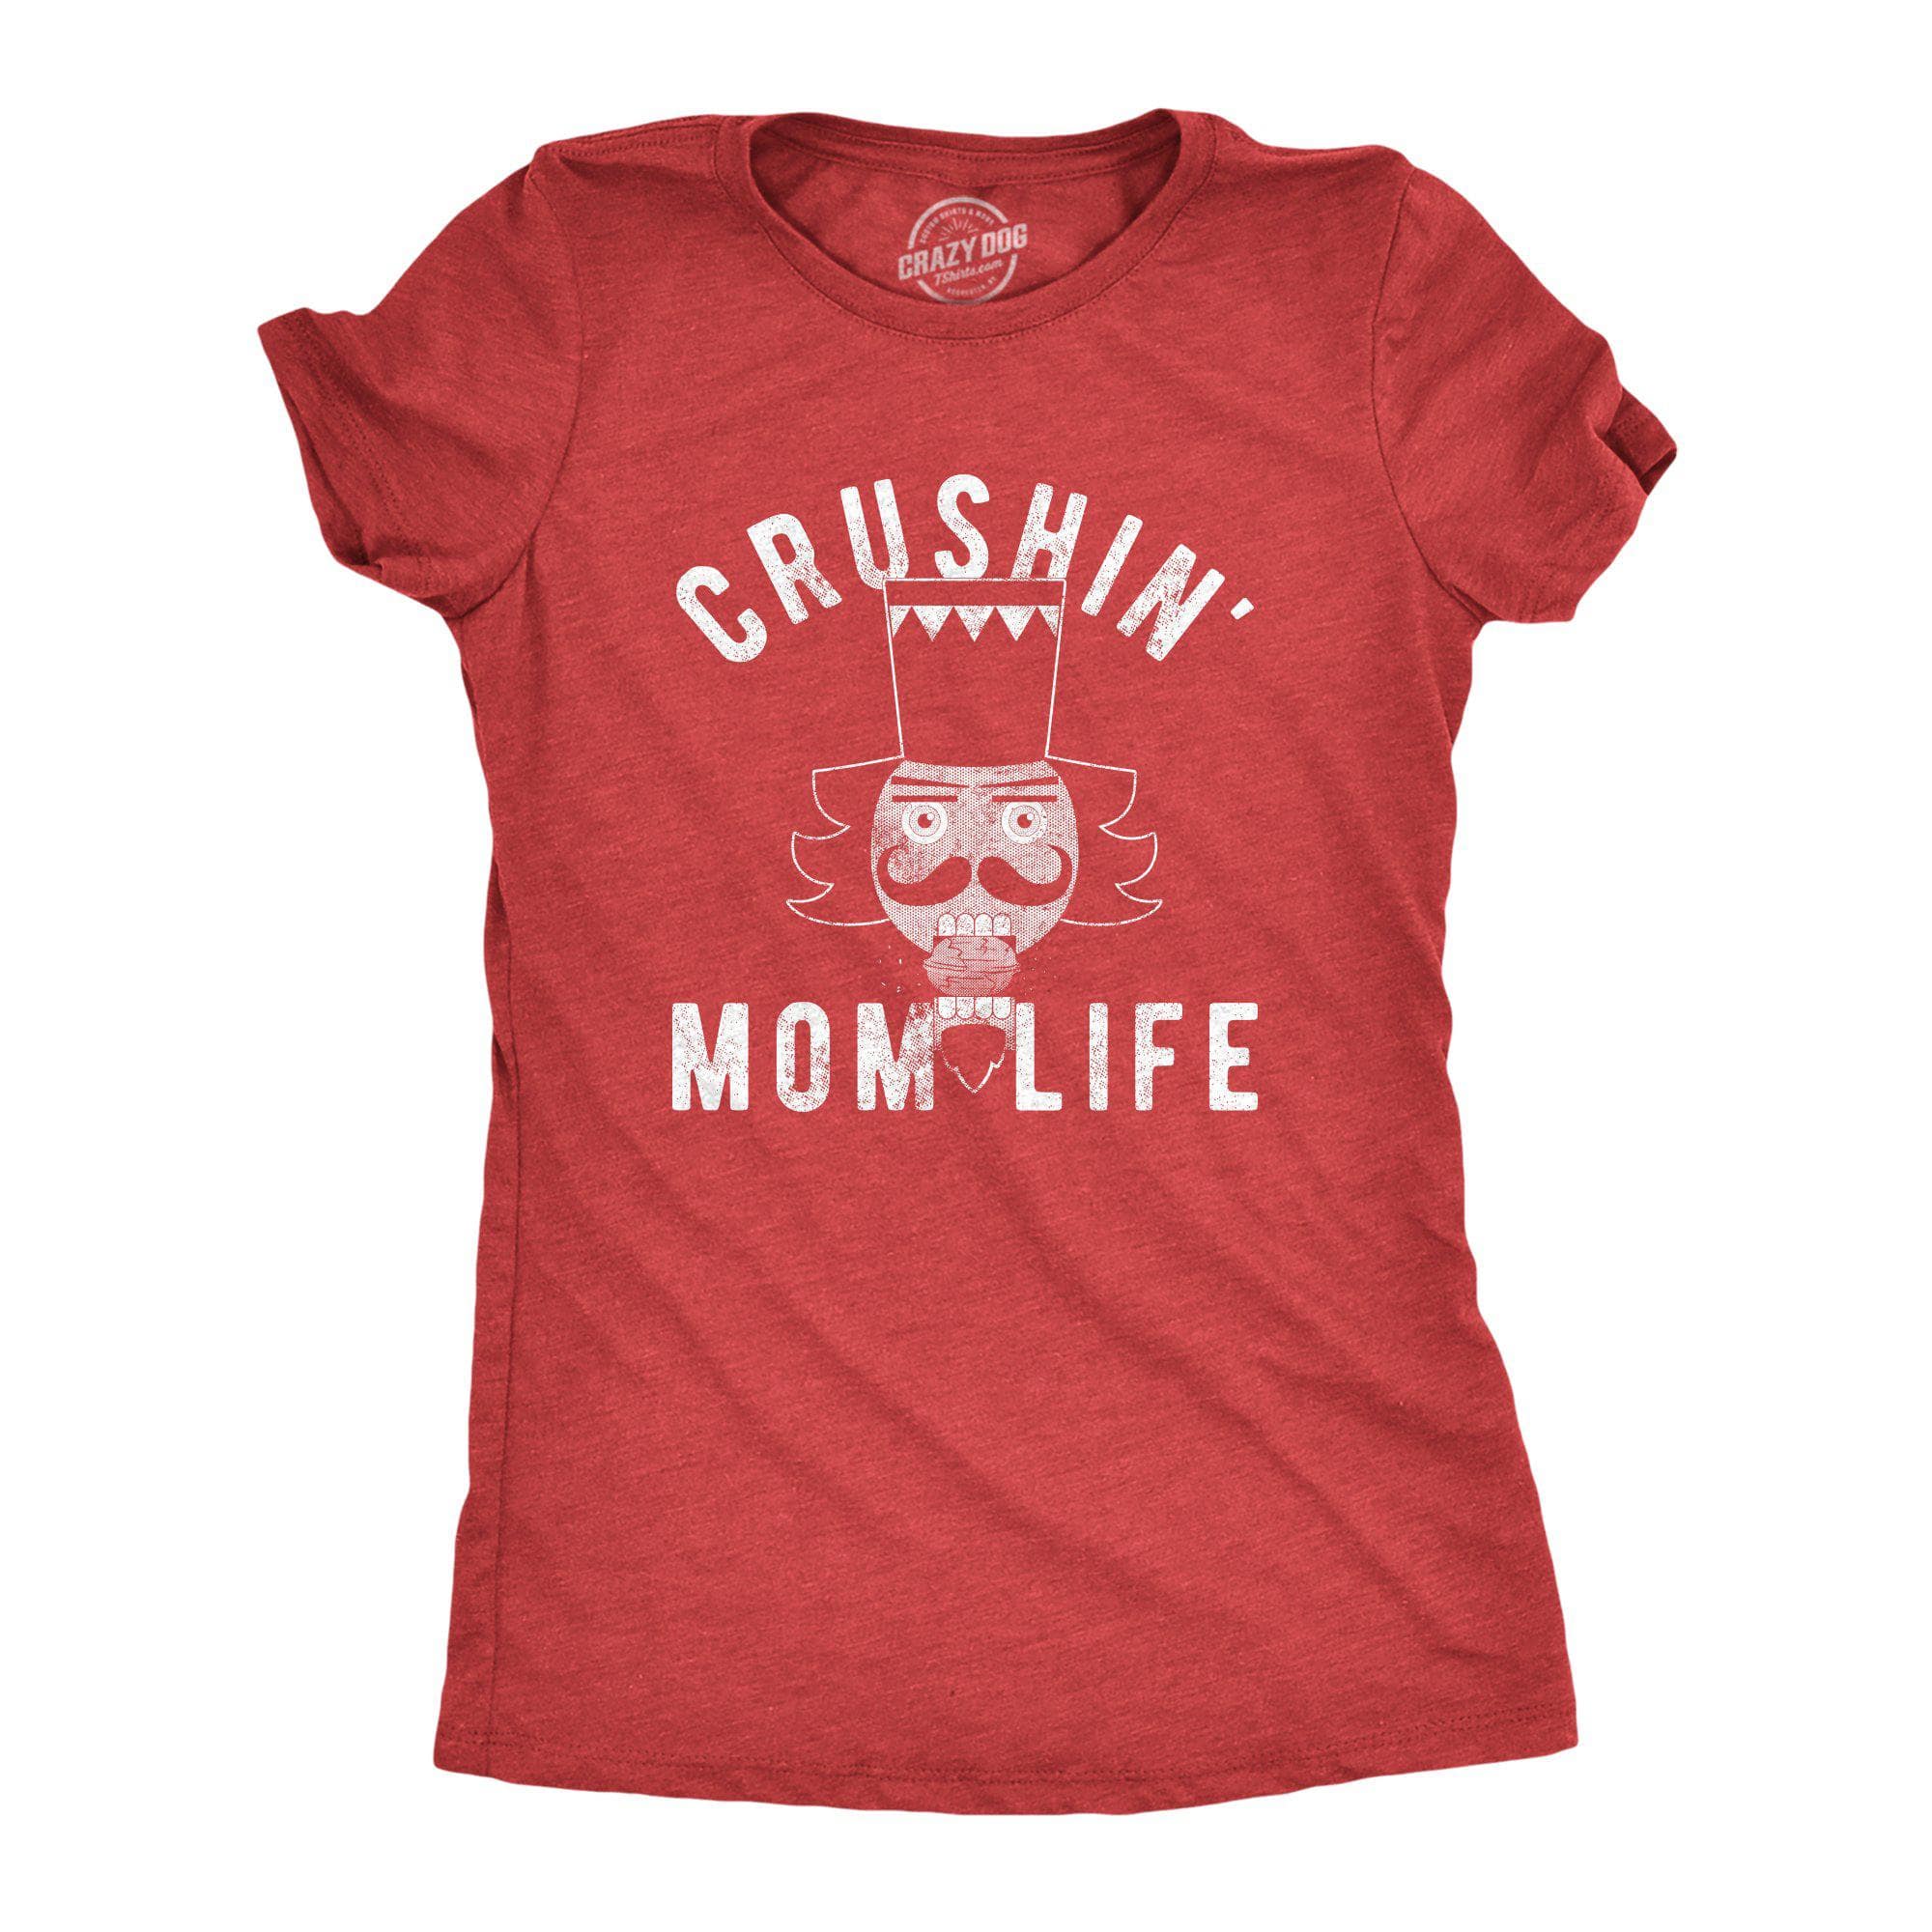 Crushin' Mom Life Women's Tshirt - Crazy Dog T-Shirts